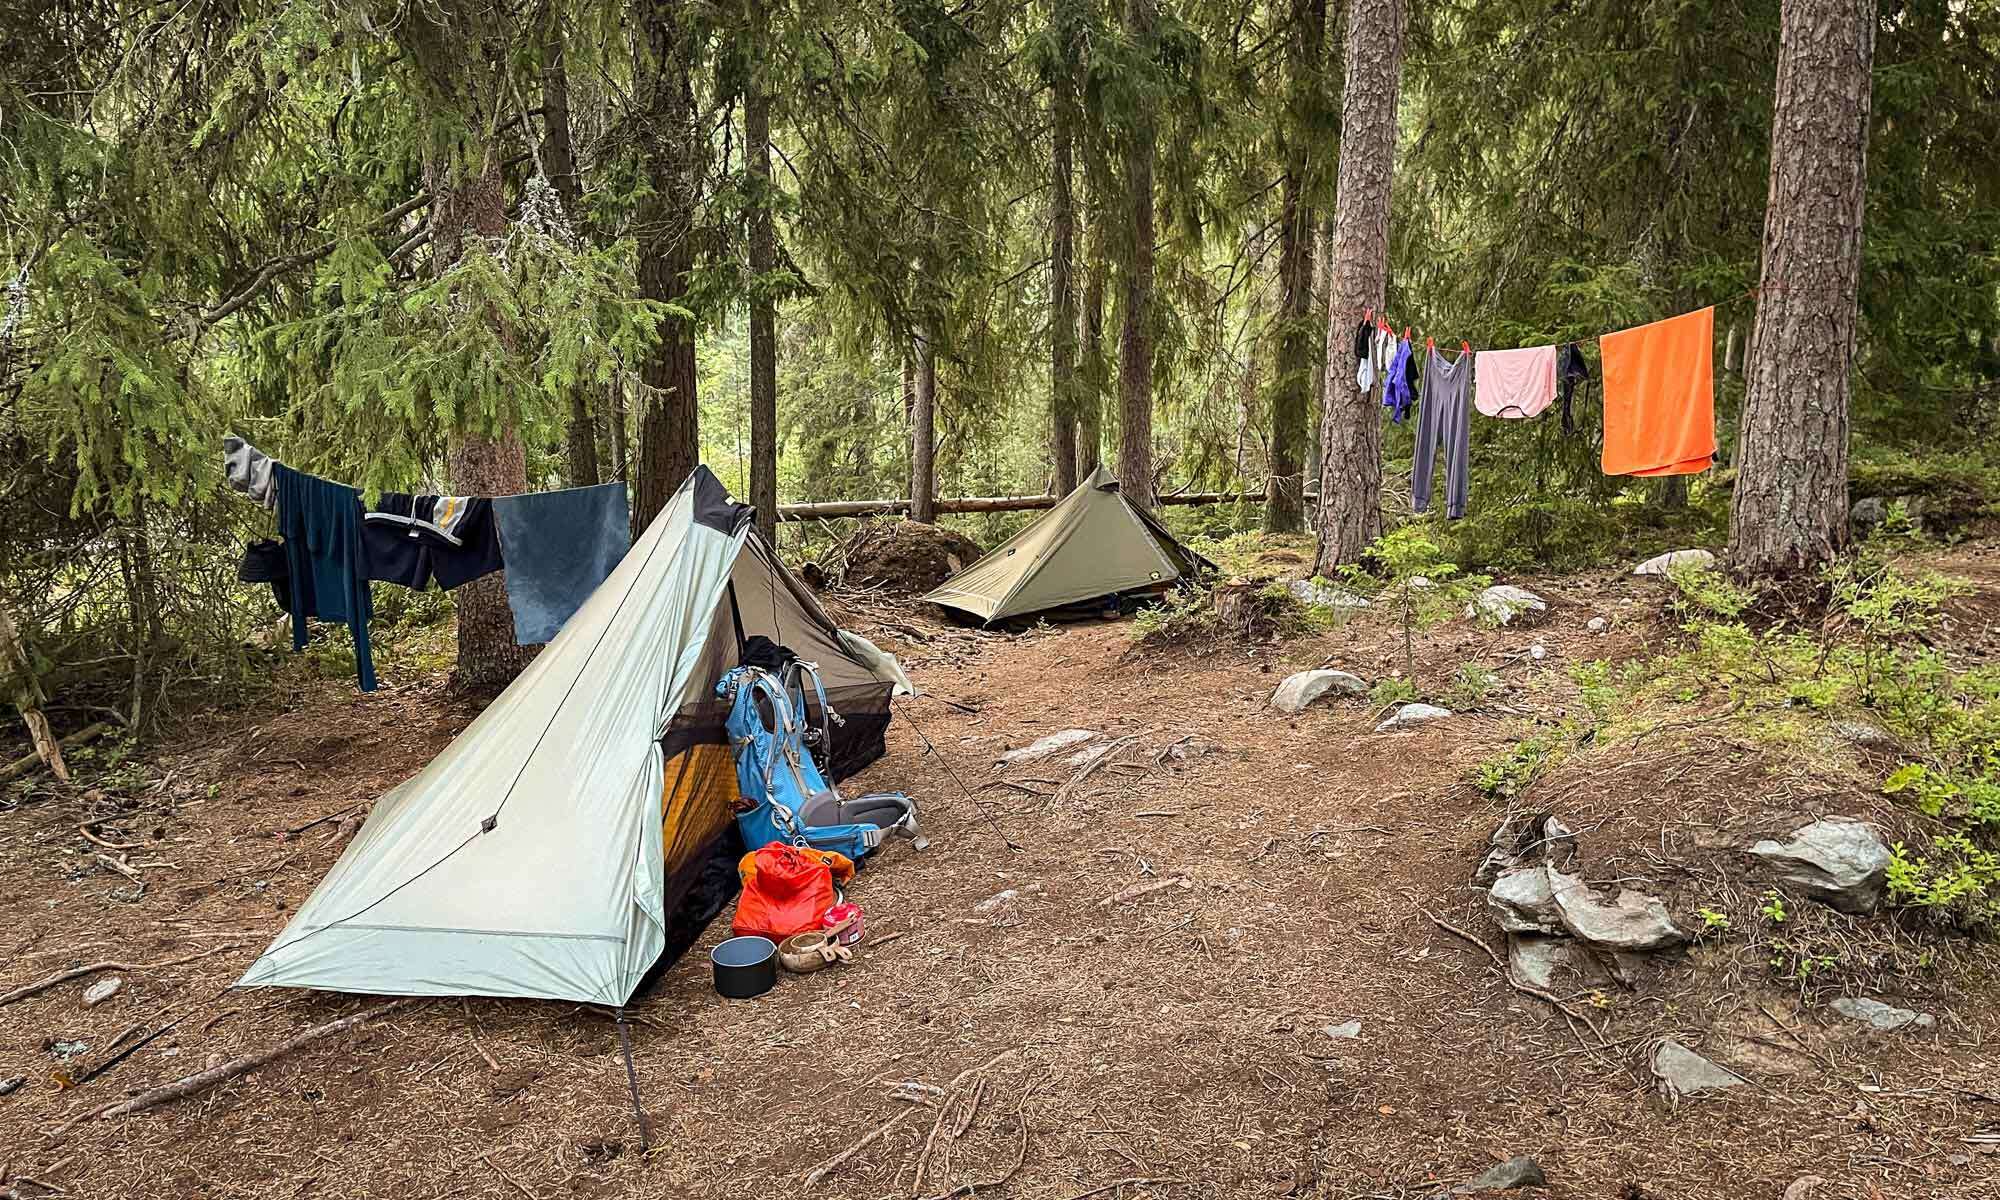 Vaelluskurssi aloittelijoille. Camping course for beginners in Finland.